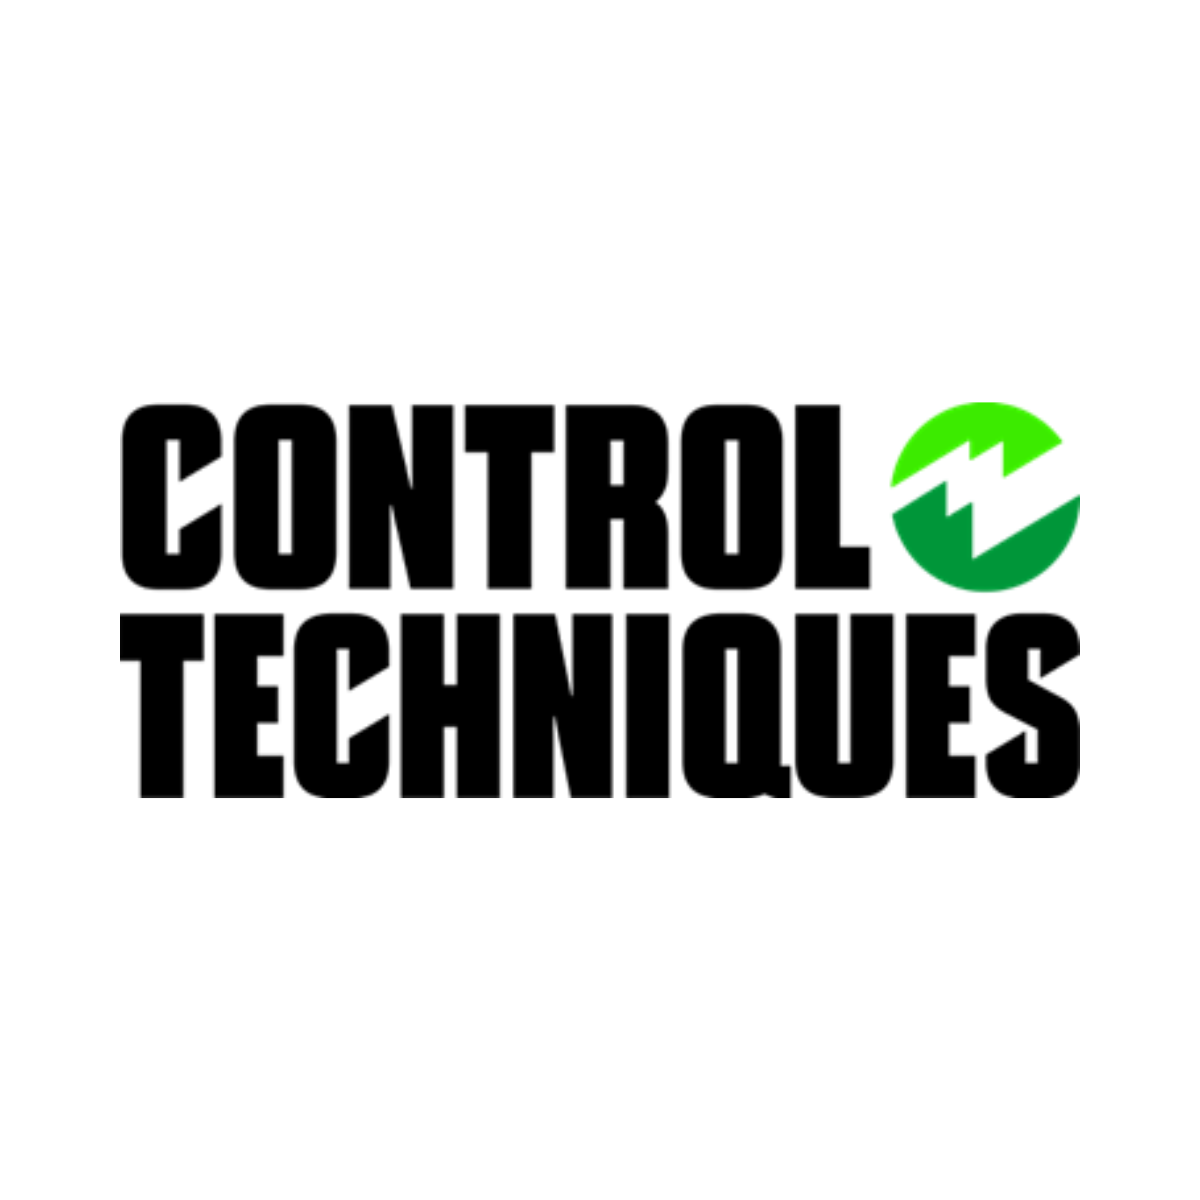 control techniques